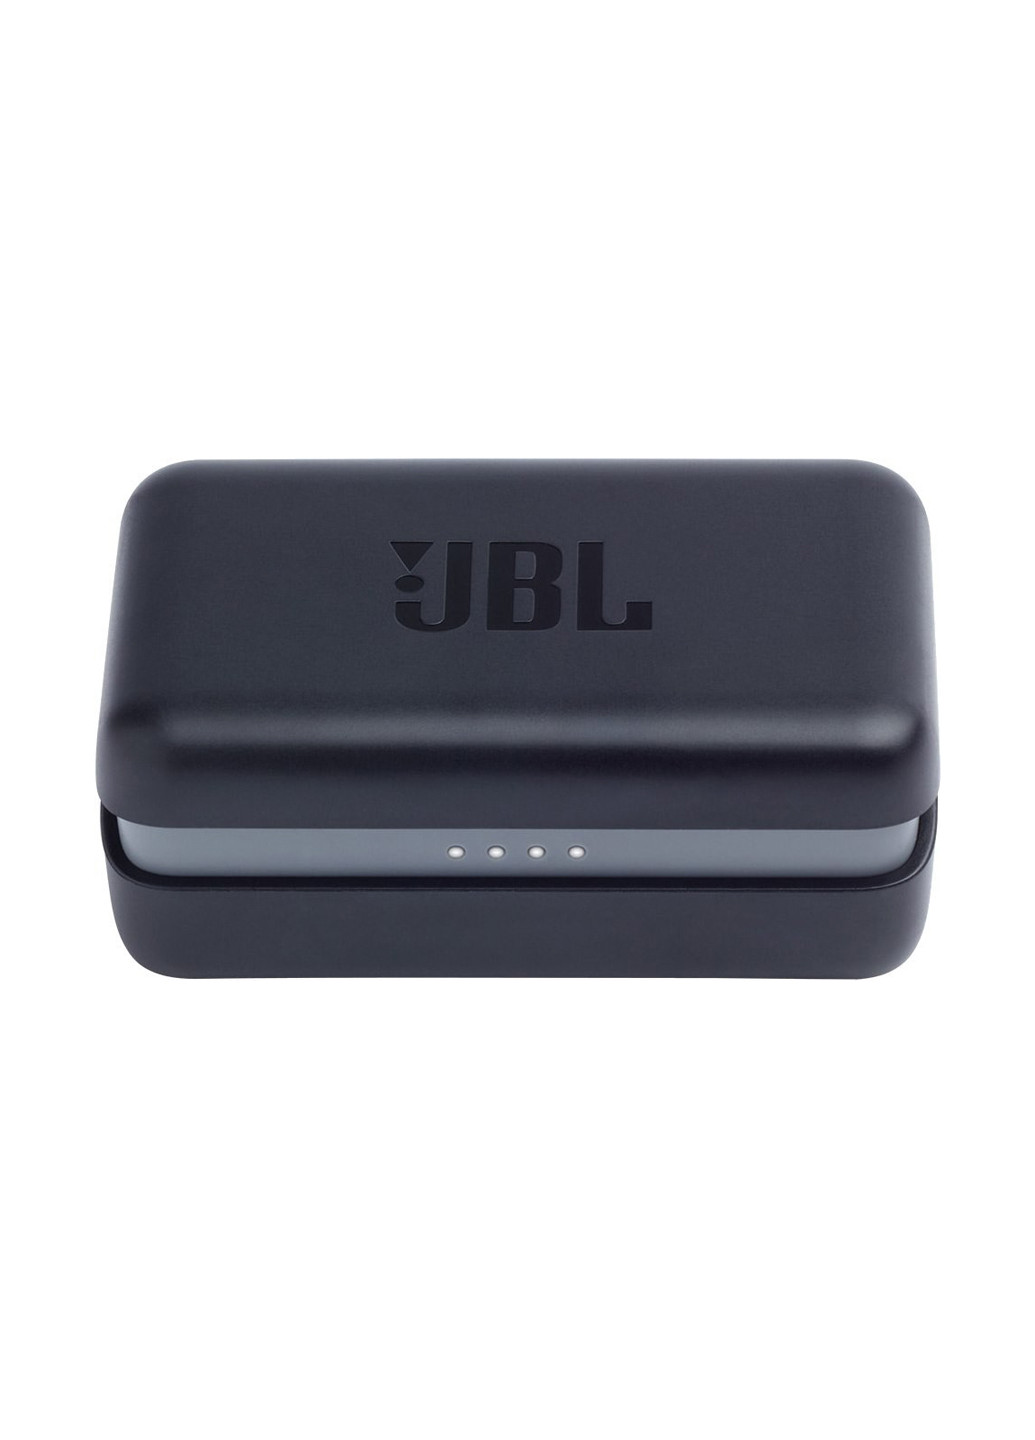 Гарнитура Endurance PEAK True Wireless Black (ENDURPEAKBLK) JBL endurance peak true wireless black (jblendurpeakblk) (162366725)